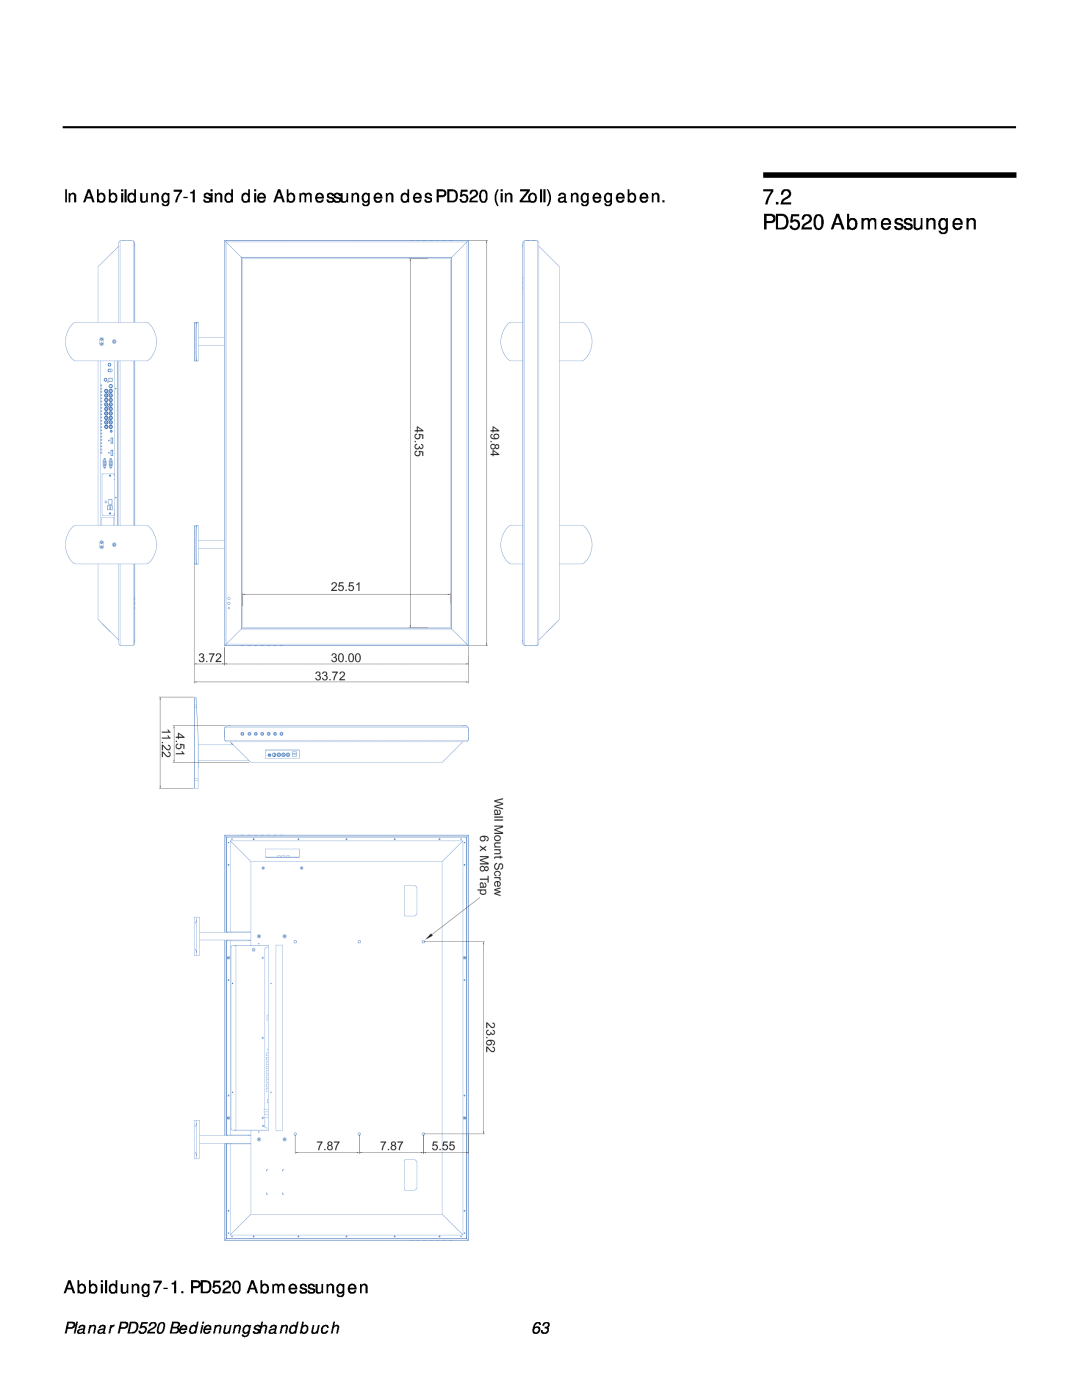 Planar manual 7.2 PD520 Abmessungen, 45.35, 49.84, 25.51 30.00 33.72 Wall Mount Screw 6 x M8 Tap, 23.62, 7.87, 5.55 